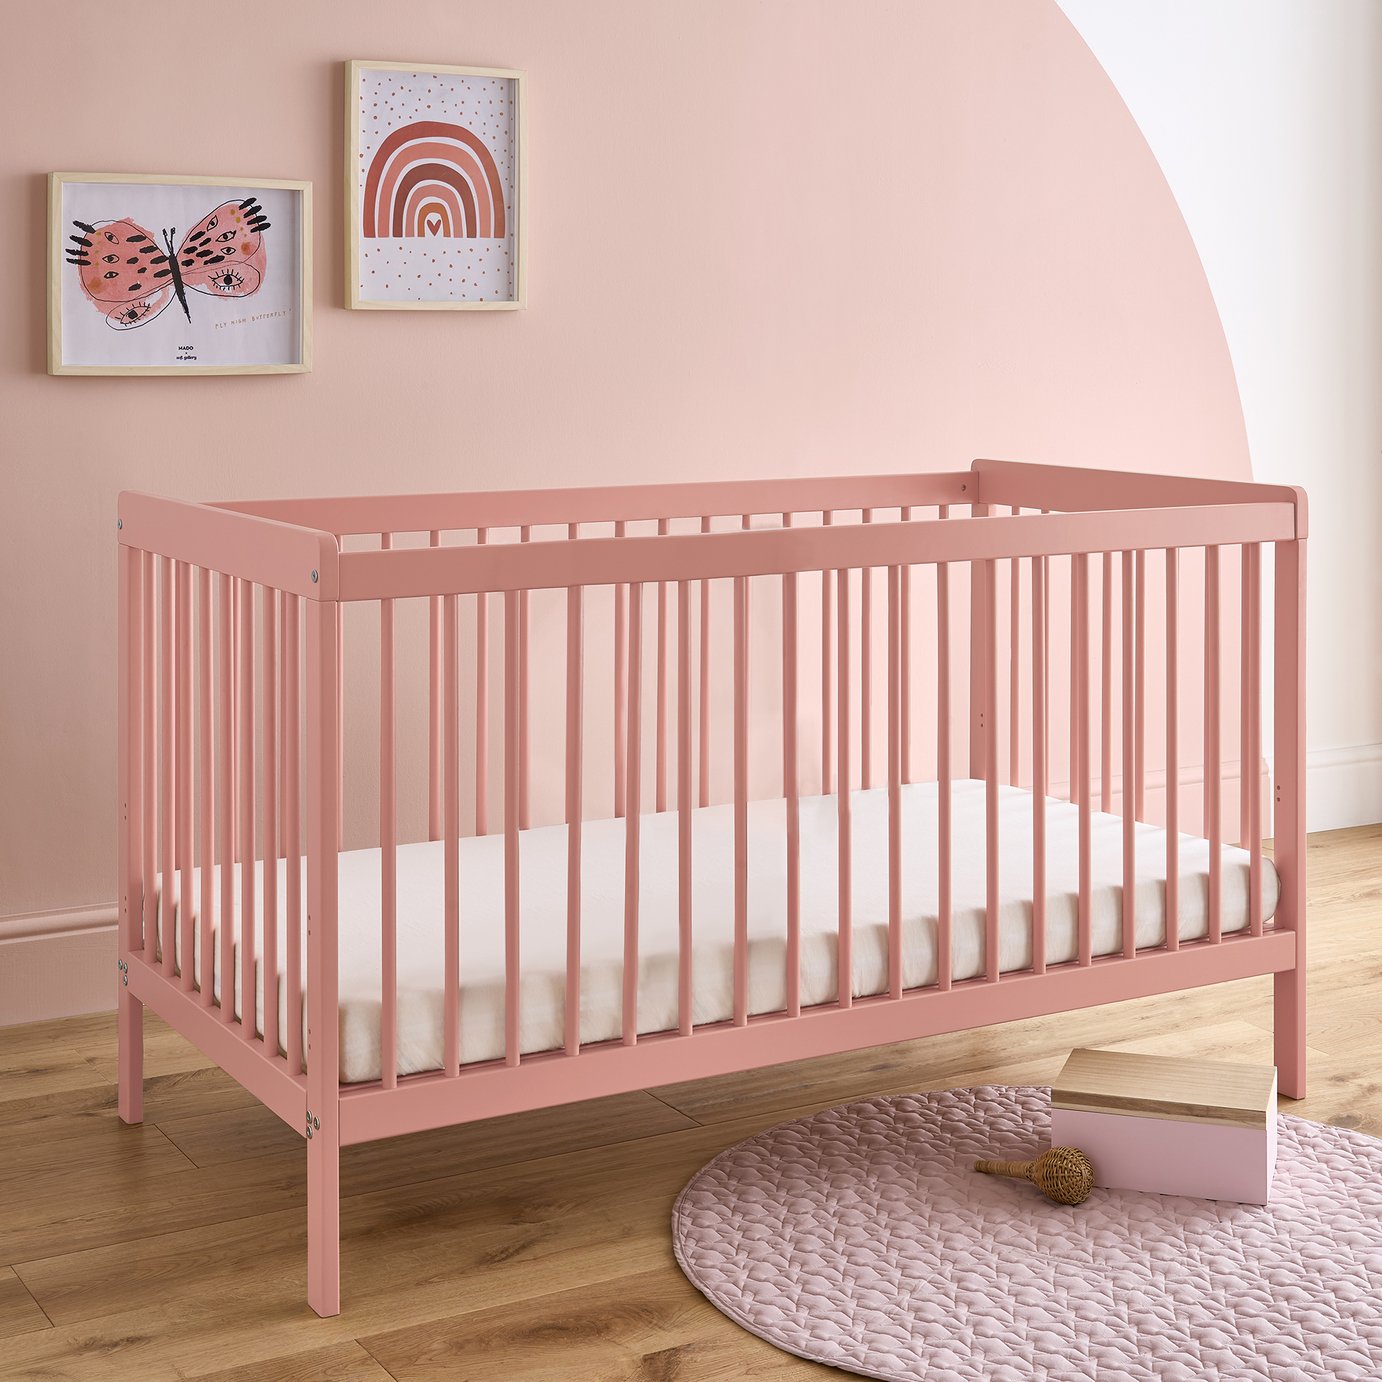 Cuddleco Nola Cot Bed - Pink